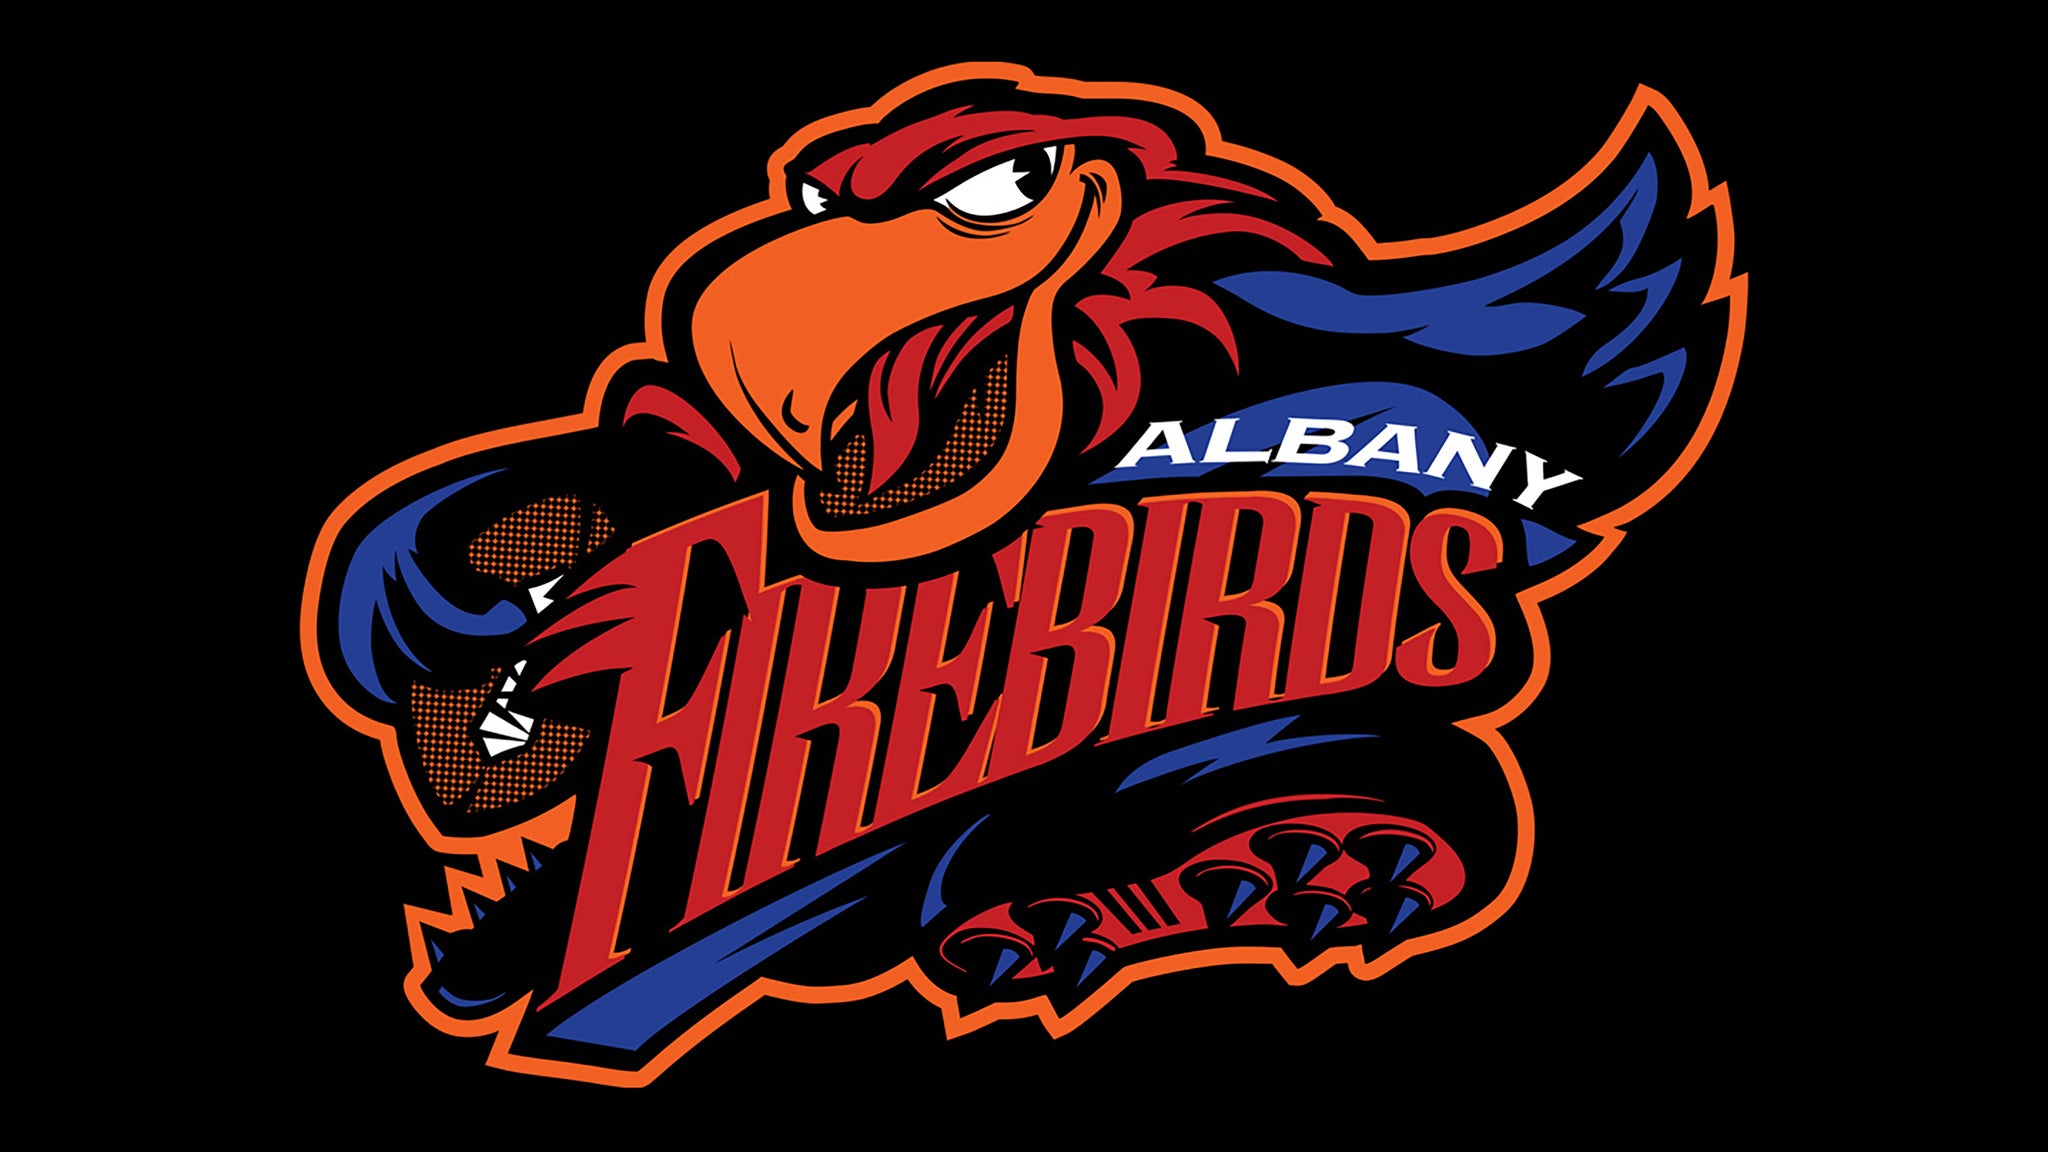 Albany Firebirds vs. West Texas Desert Hawks